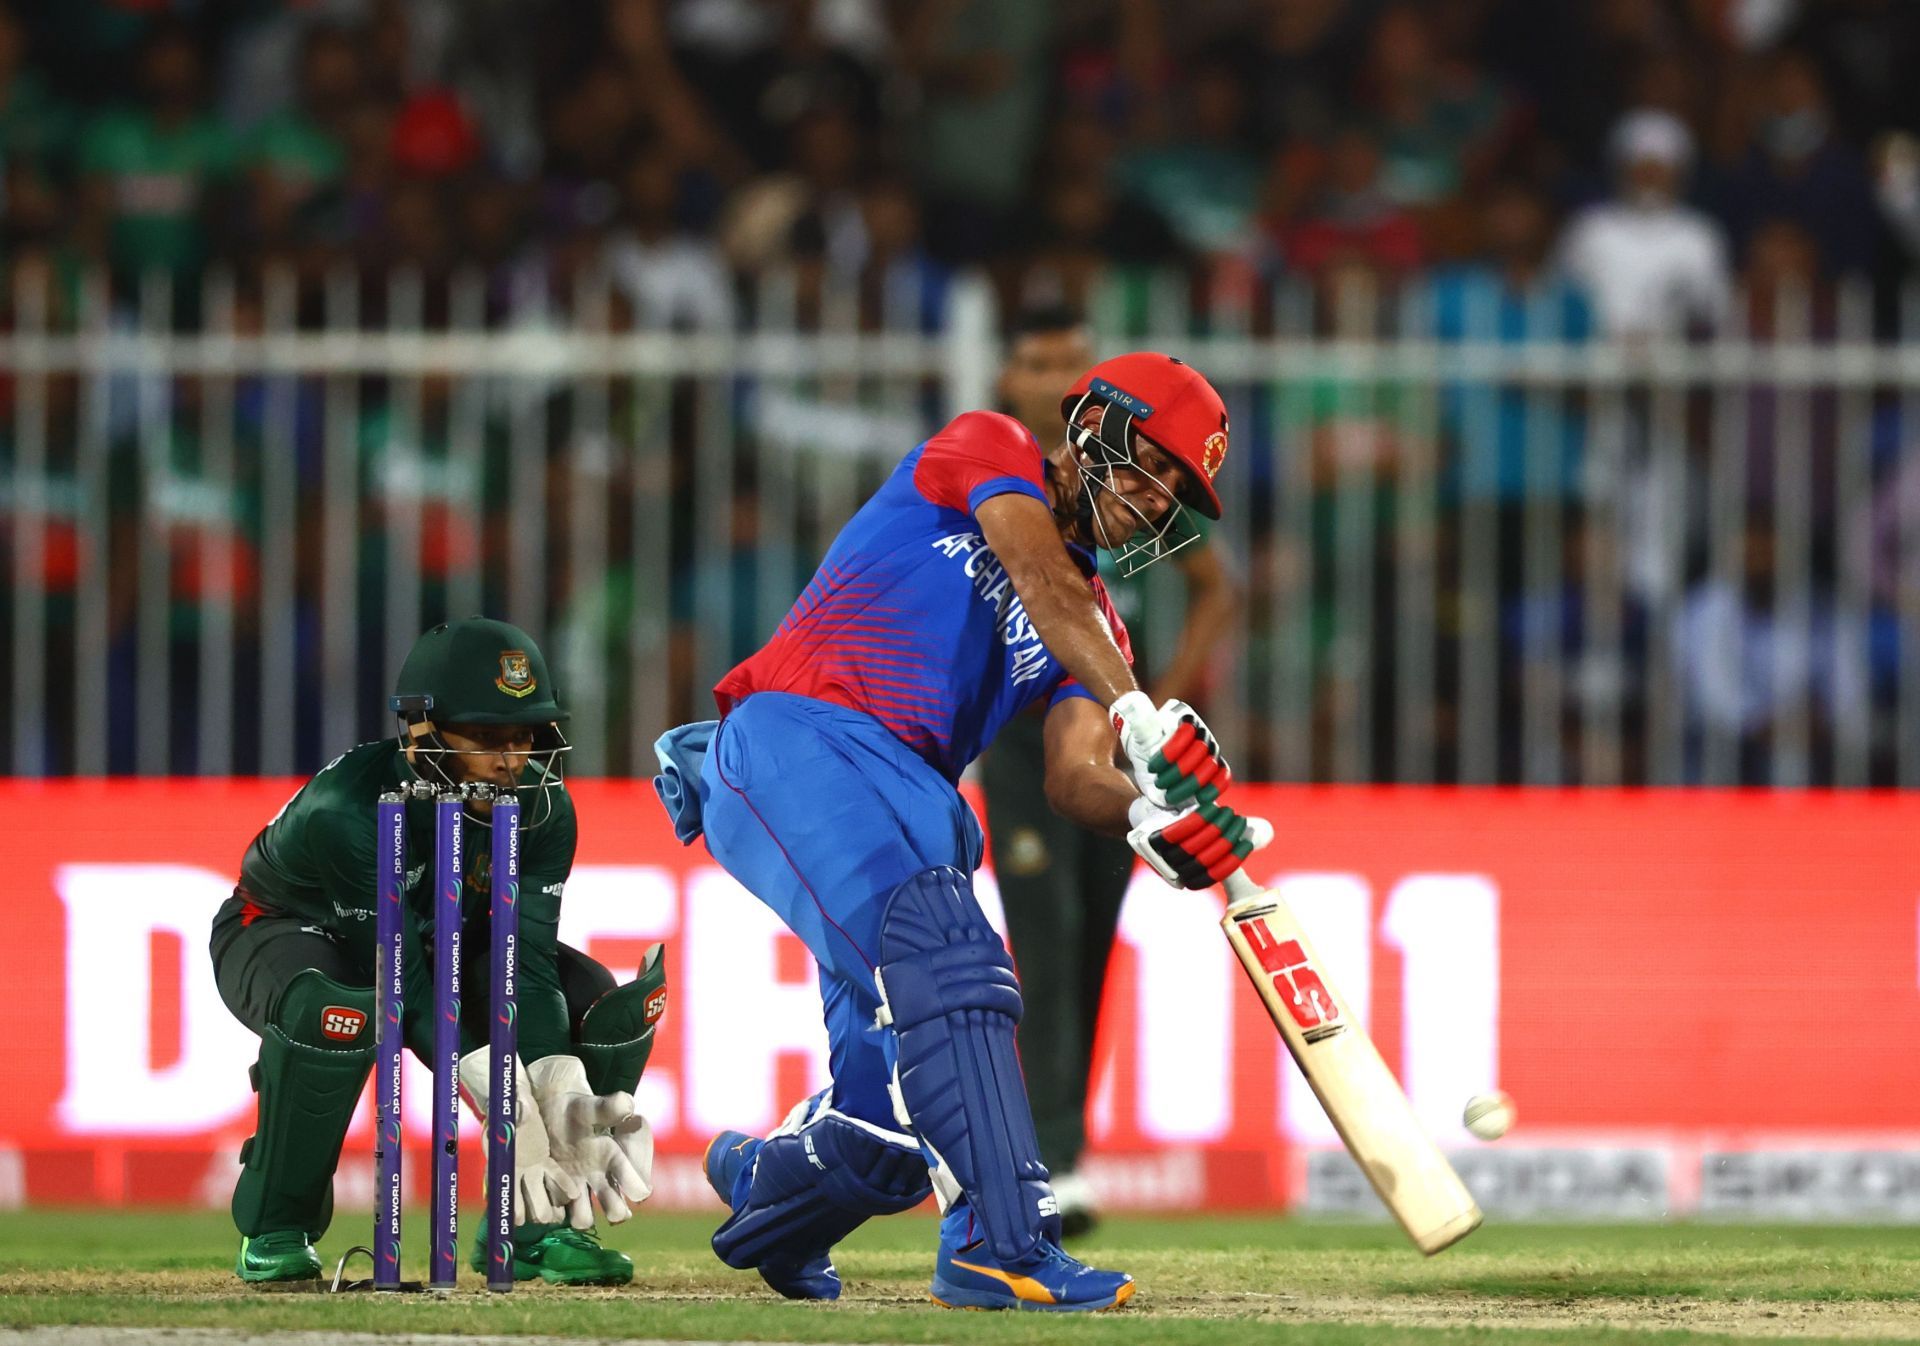 Najibullah Zadran during the match against Bangladesh. Pic: Getty Images